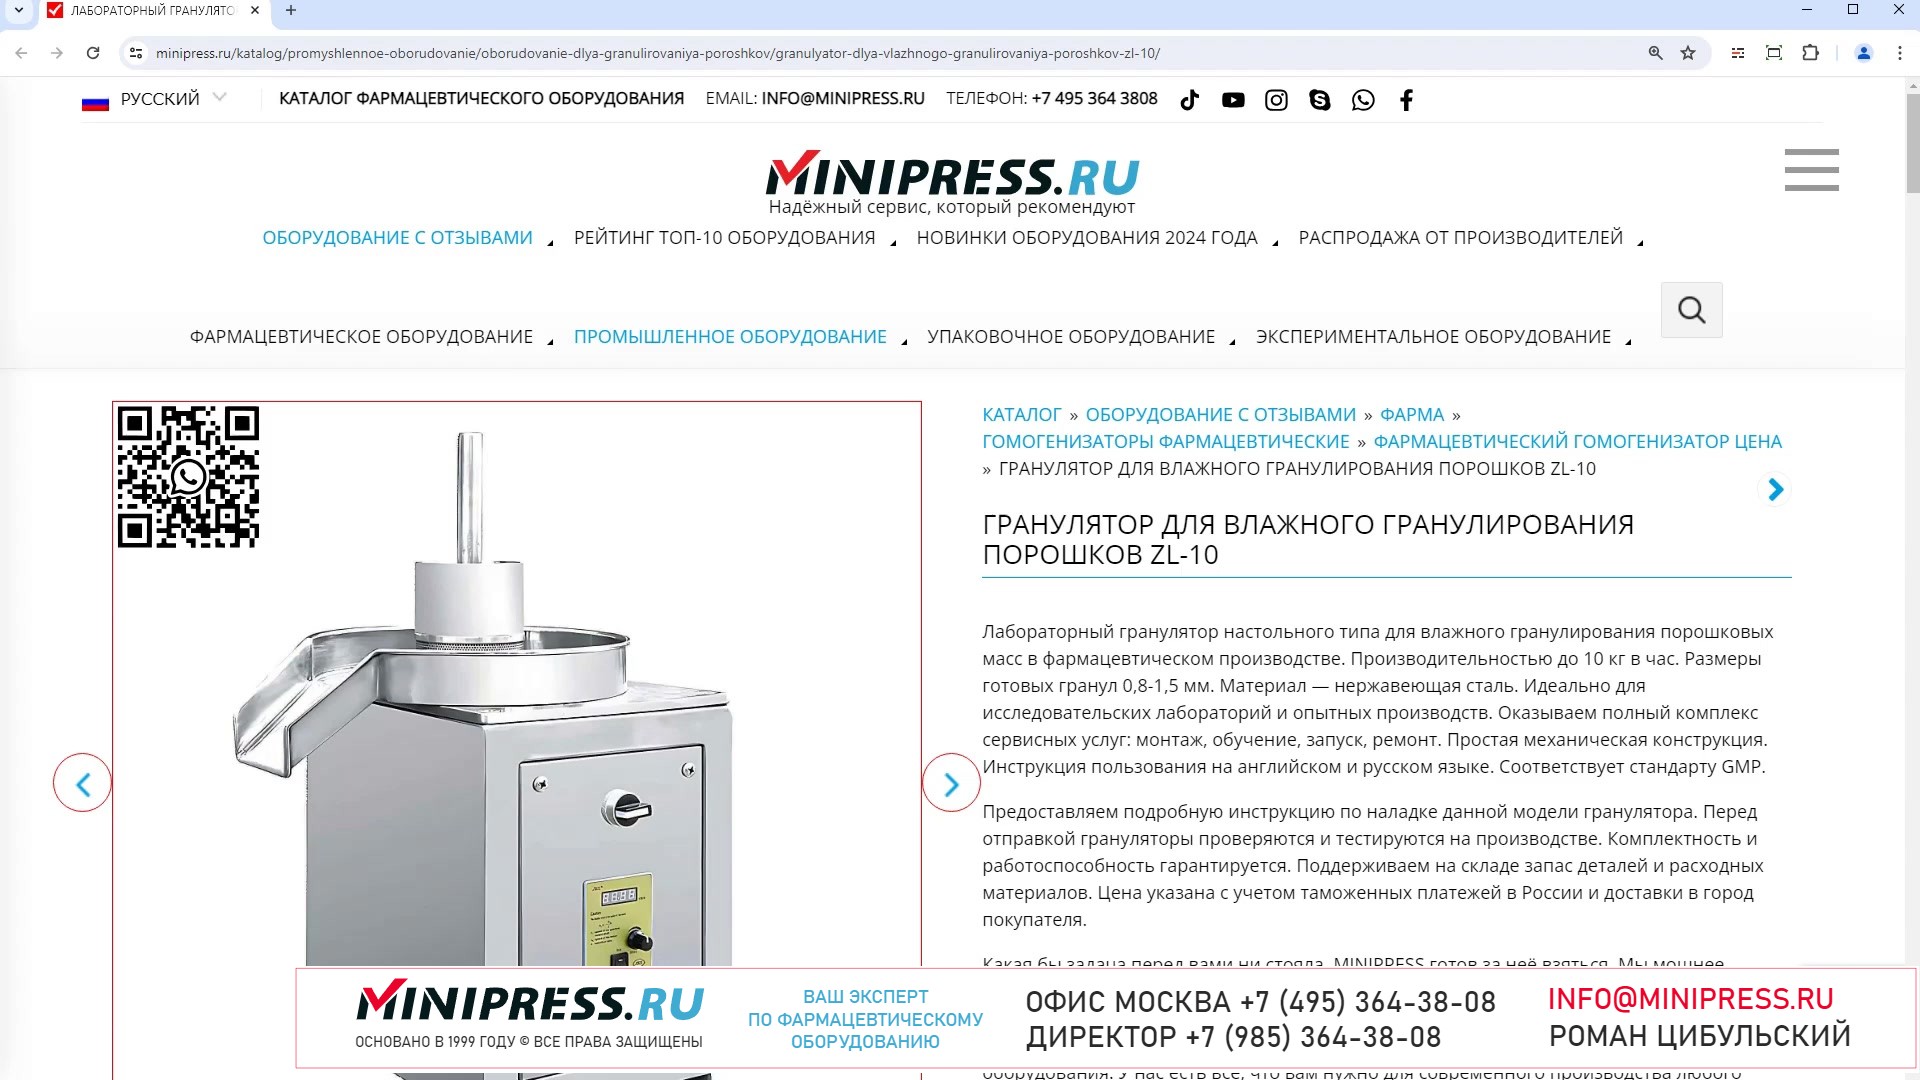 Minipress.ru Гранулятор для влажного гранулирования порошков ZL-10